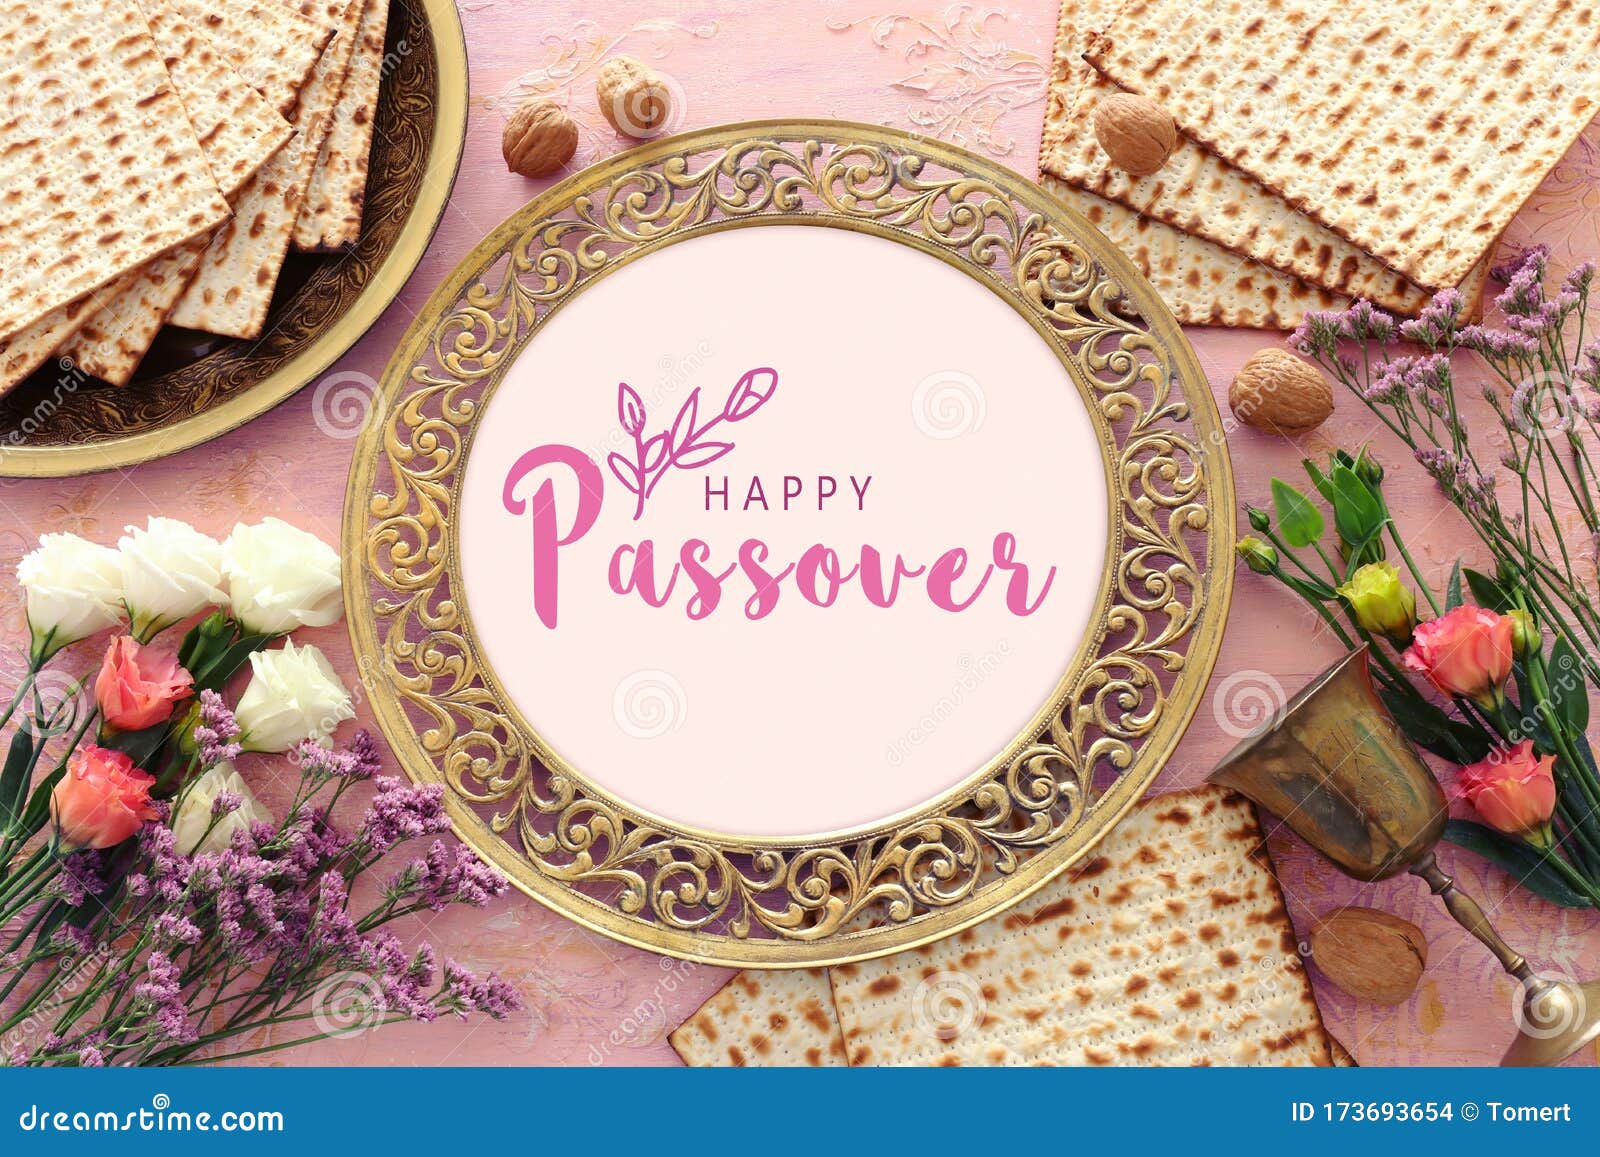 Pesah Celebration Concept Jewish Passover Holiday Stock Photo - Image ...